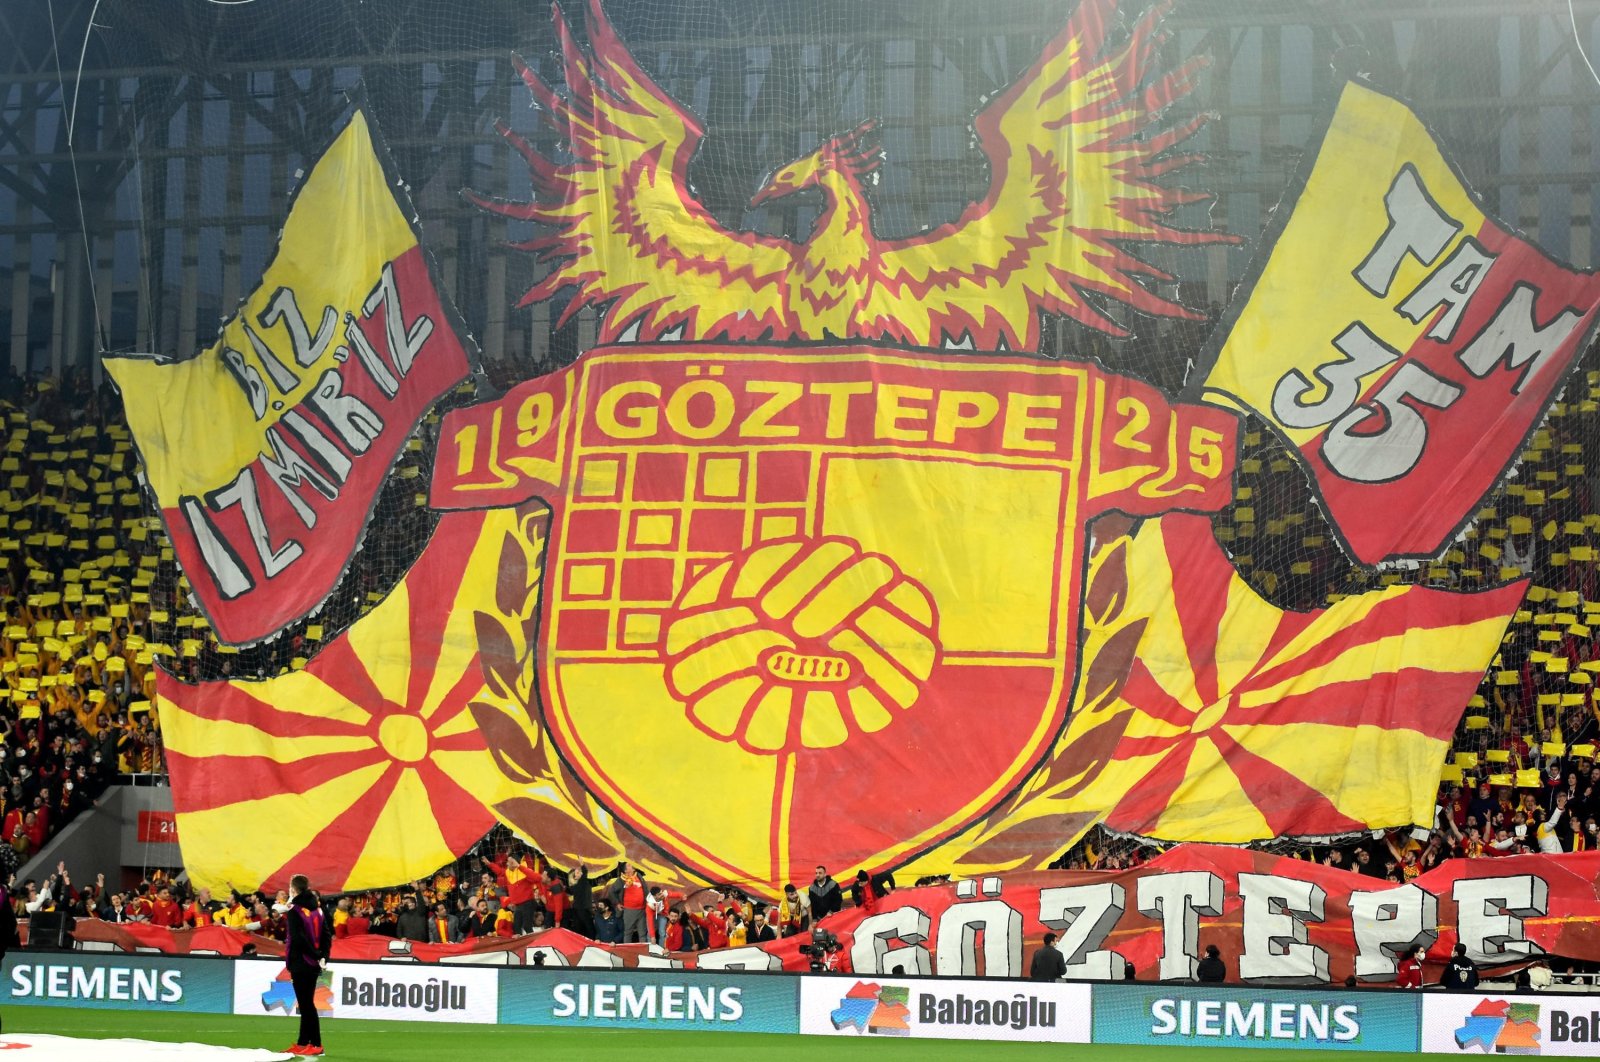 Göztepe fans display the club logo and banners ahead of a Süper Lig match, Izmir, Turkey, March 3, 2022. (DHA Photo)